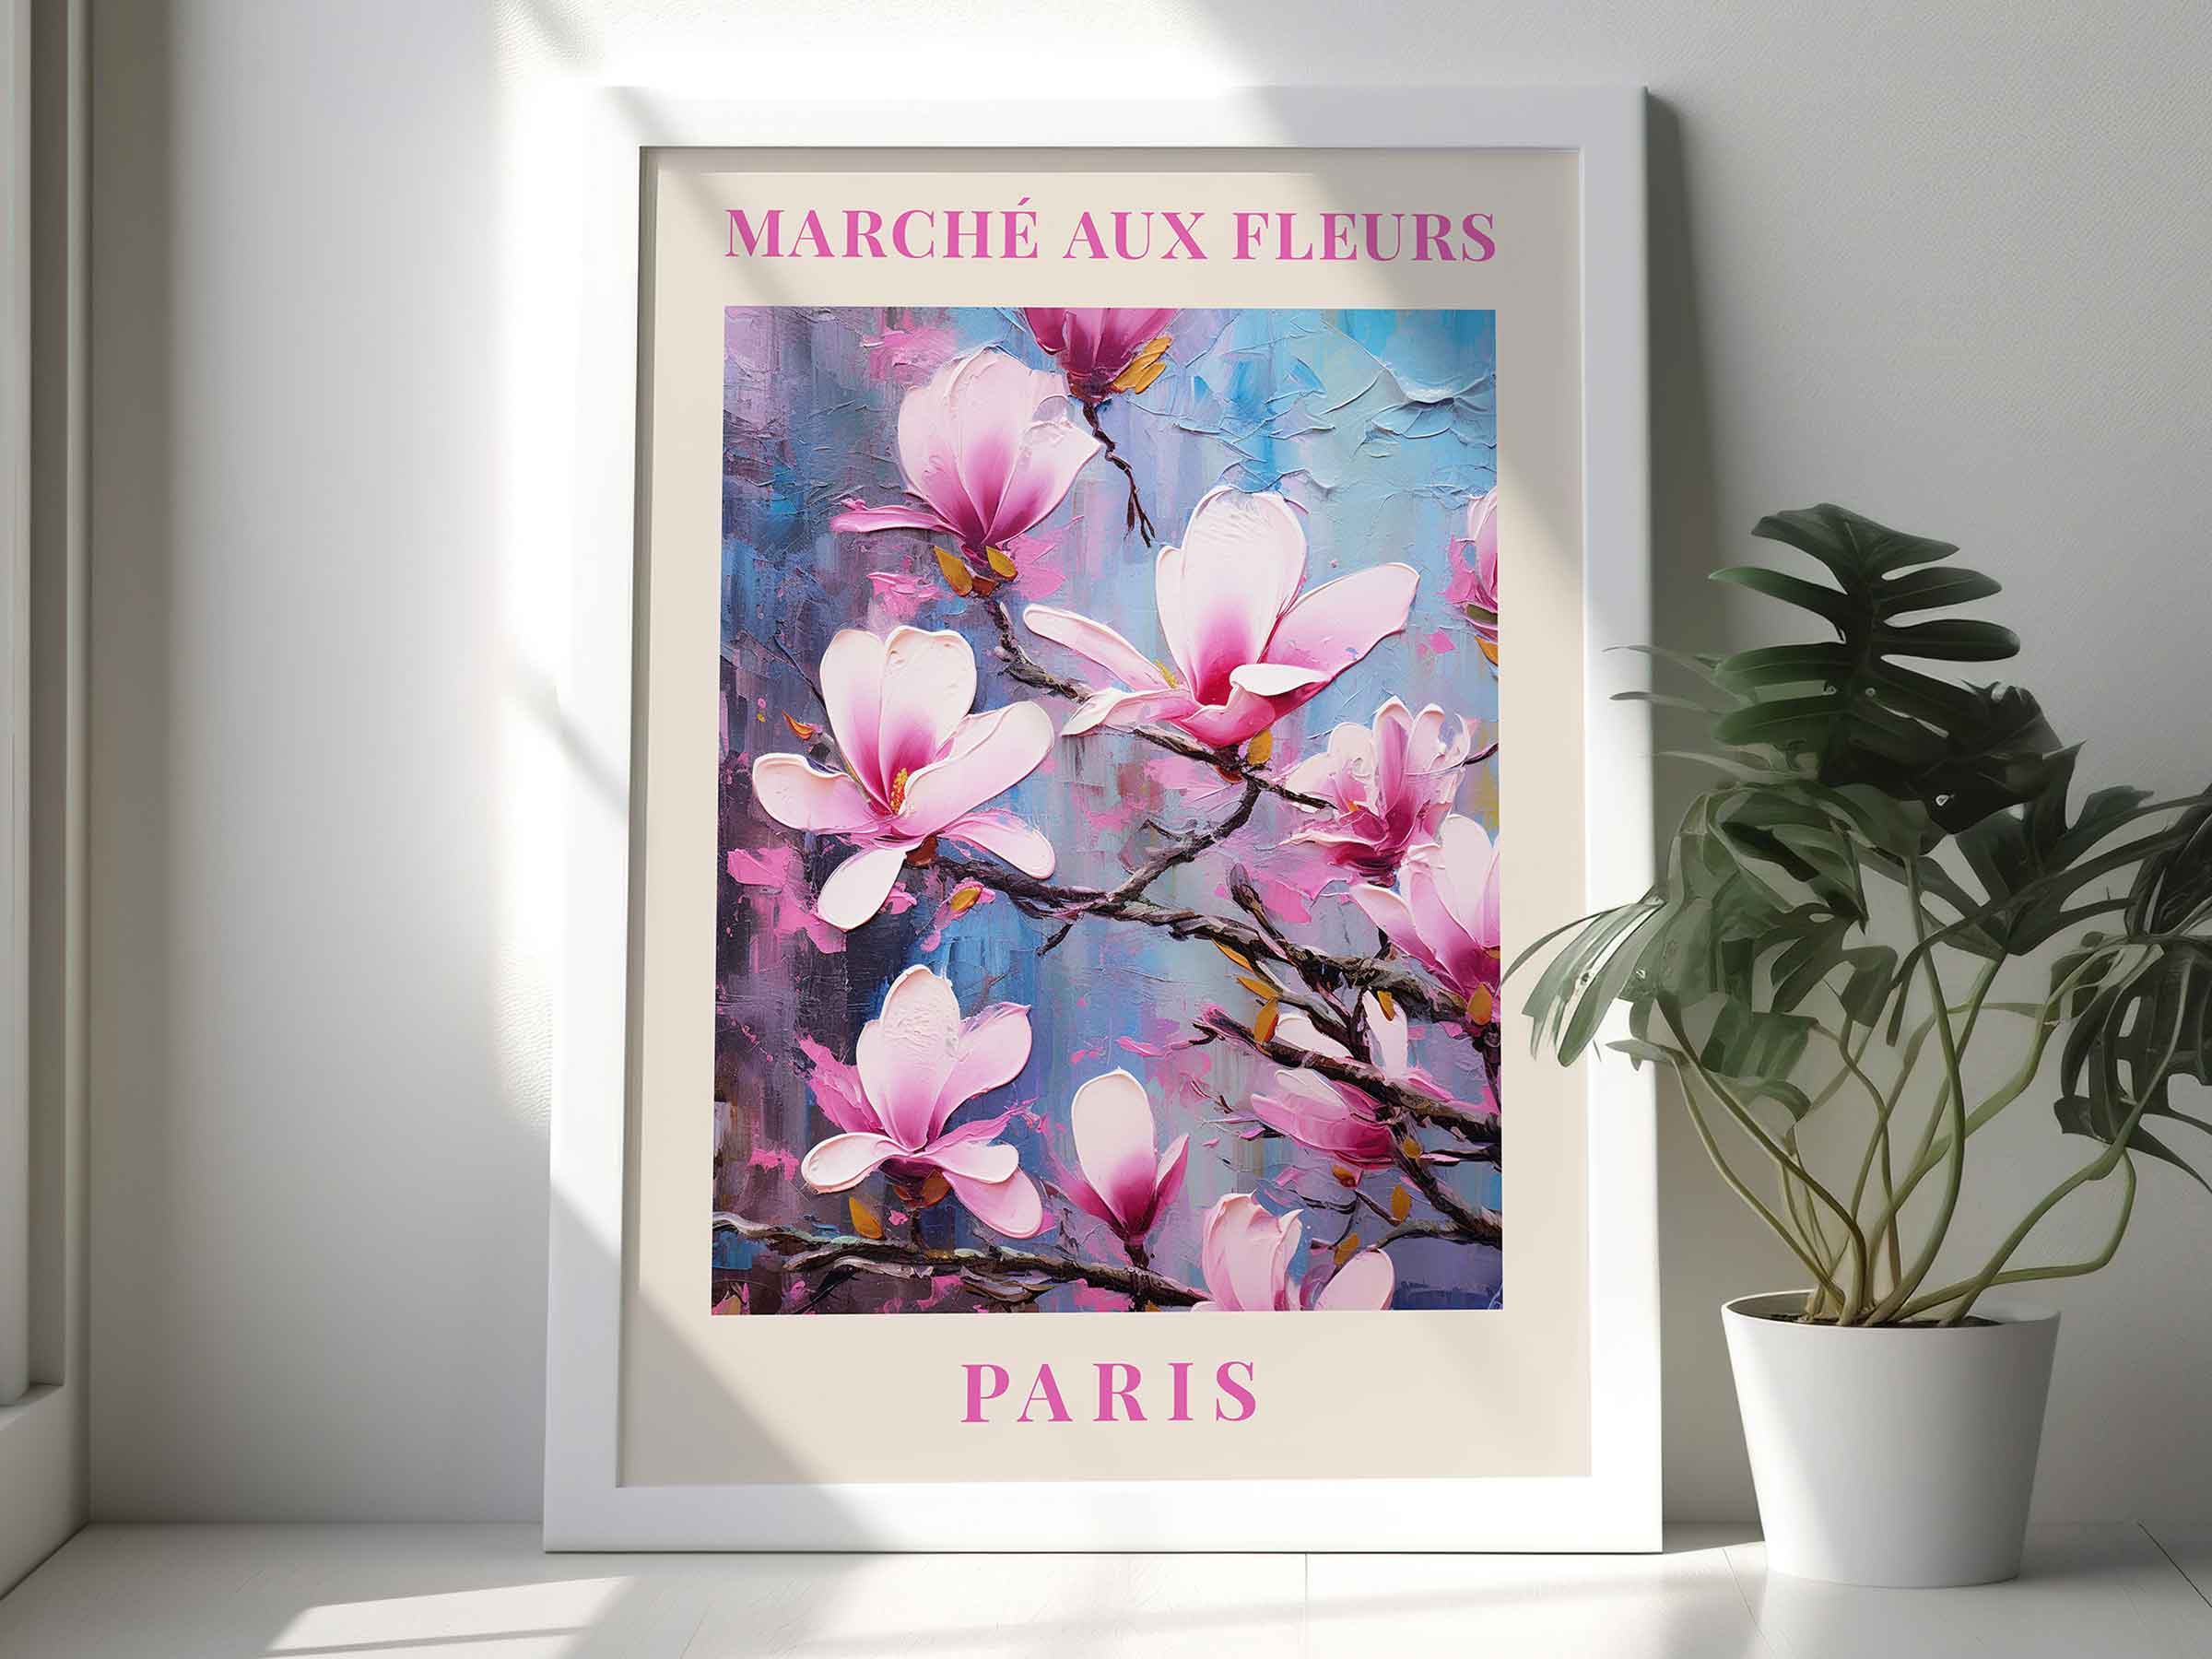 Framed Image of Paris Flower Market Prints Botanical Boho Vintage Painting Wall Art Posters